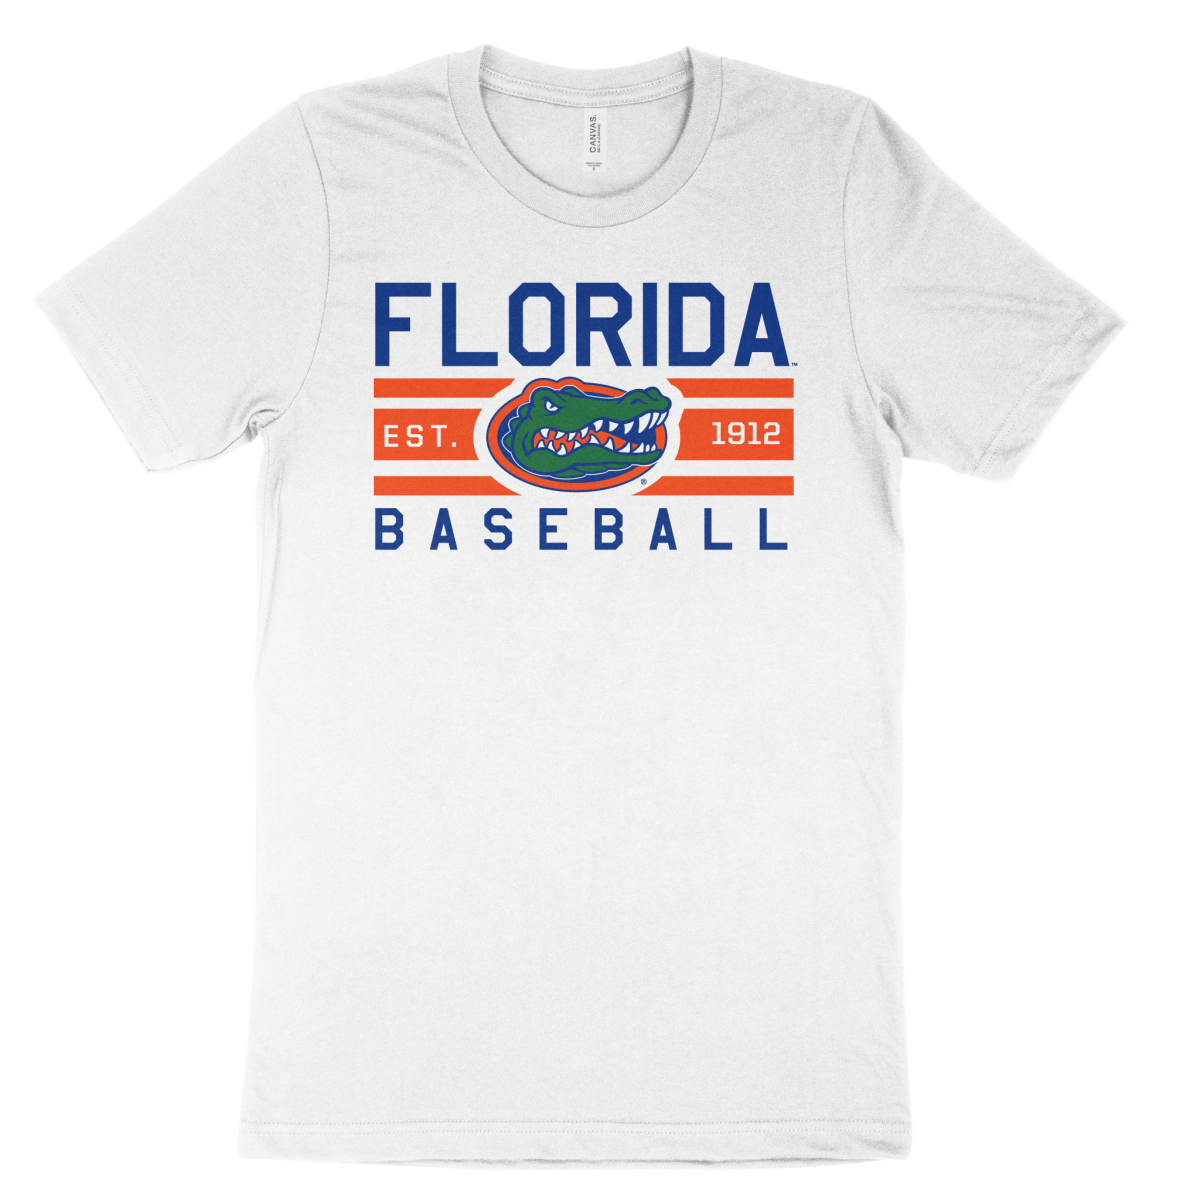 Baseball Bar T-Shirt - Shop B-Unlimited